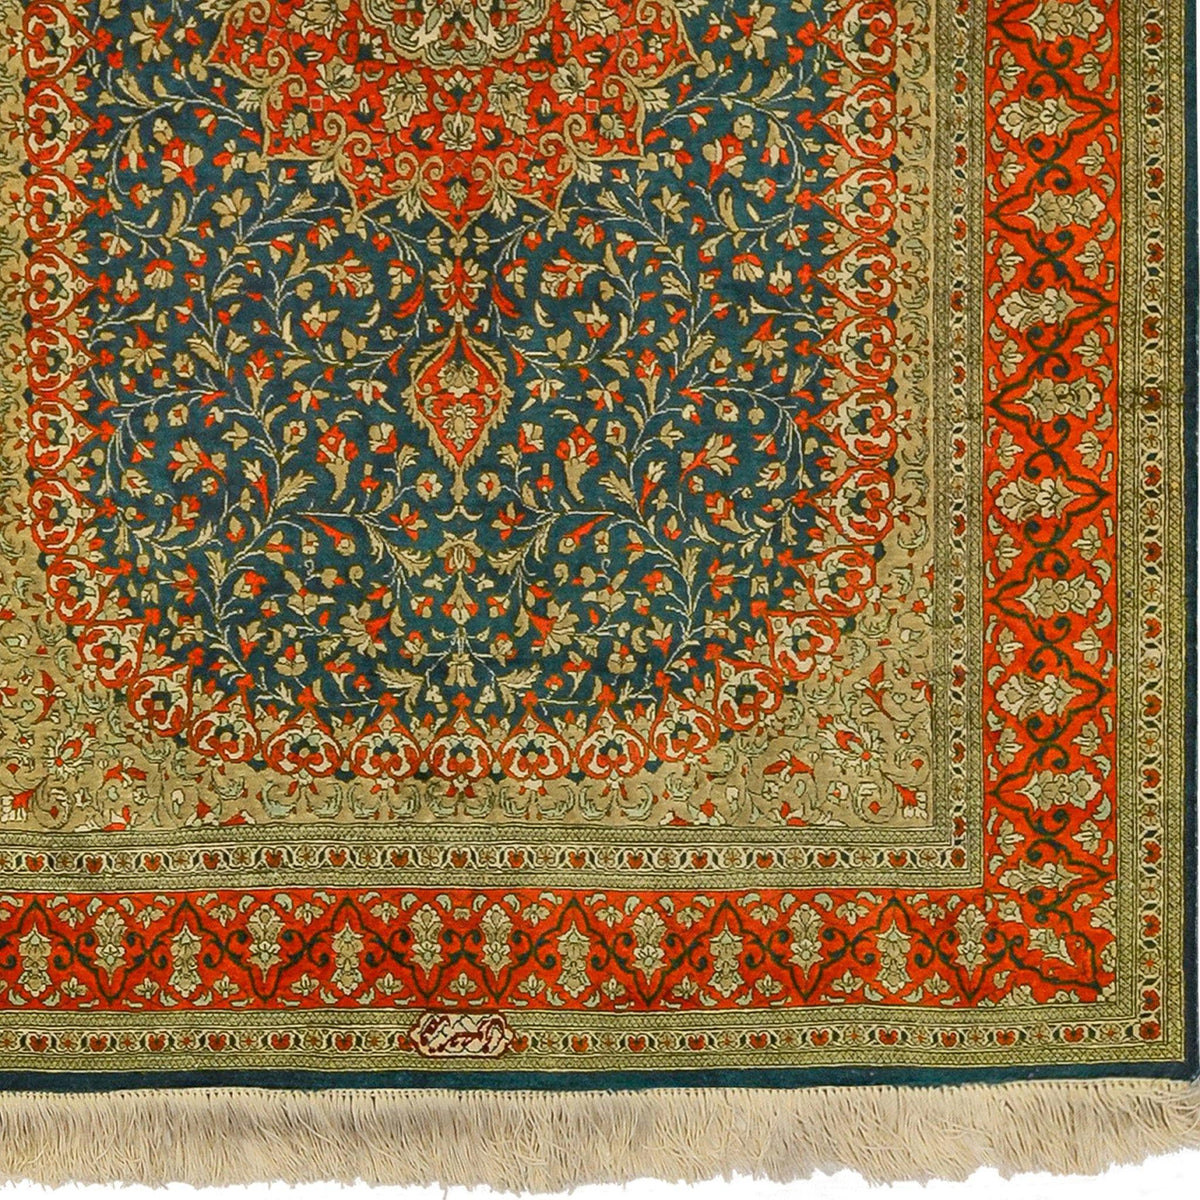 Fine Hand-knotted Persian Silk Qom/Qum Rug (SIGNED)